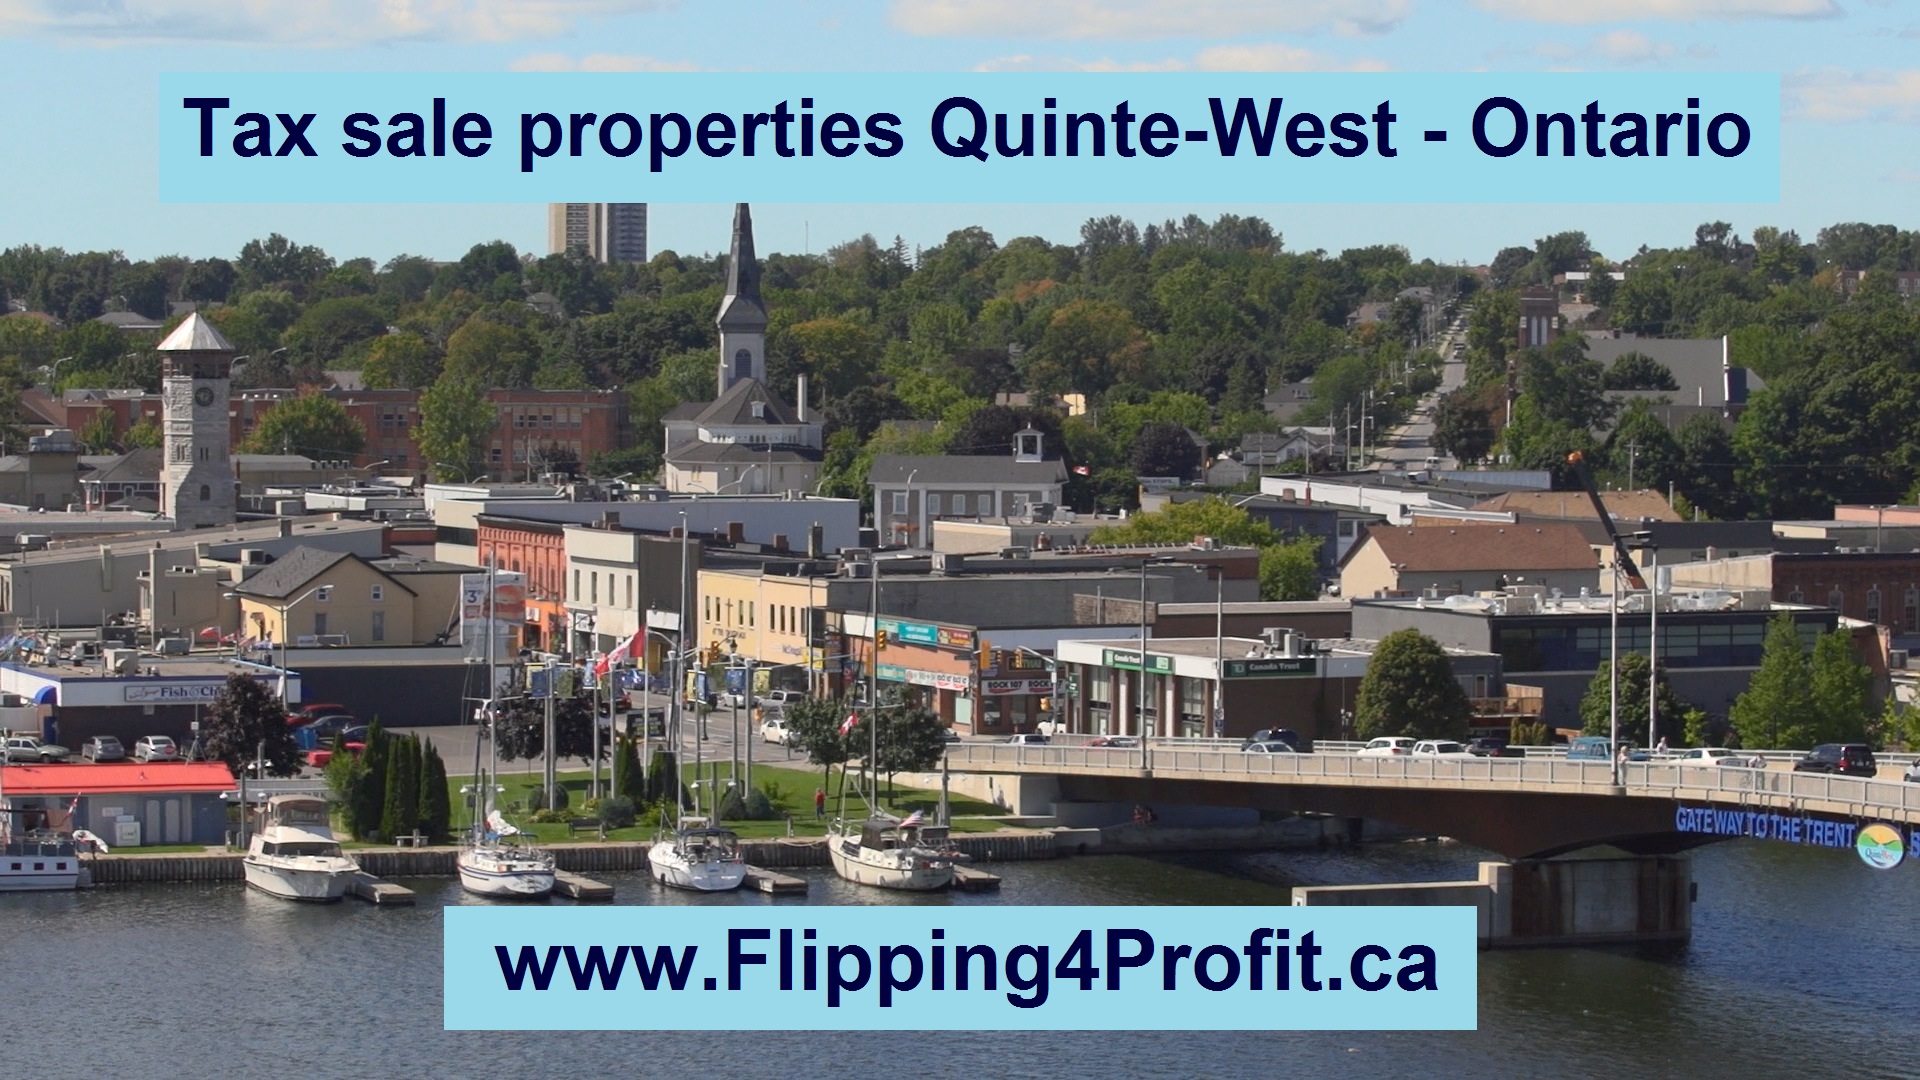 Tax sale properties Quinte-West - Ontario